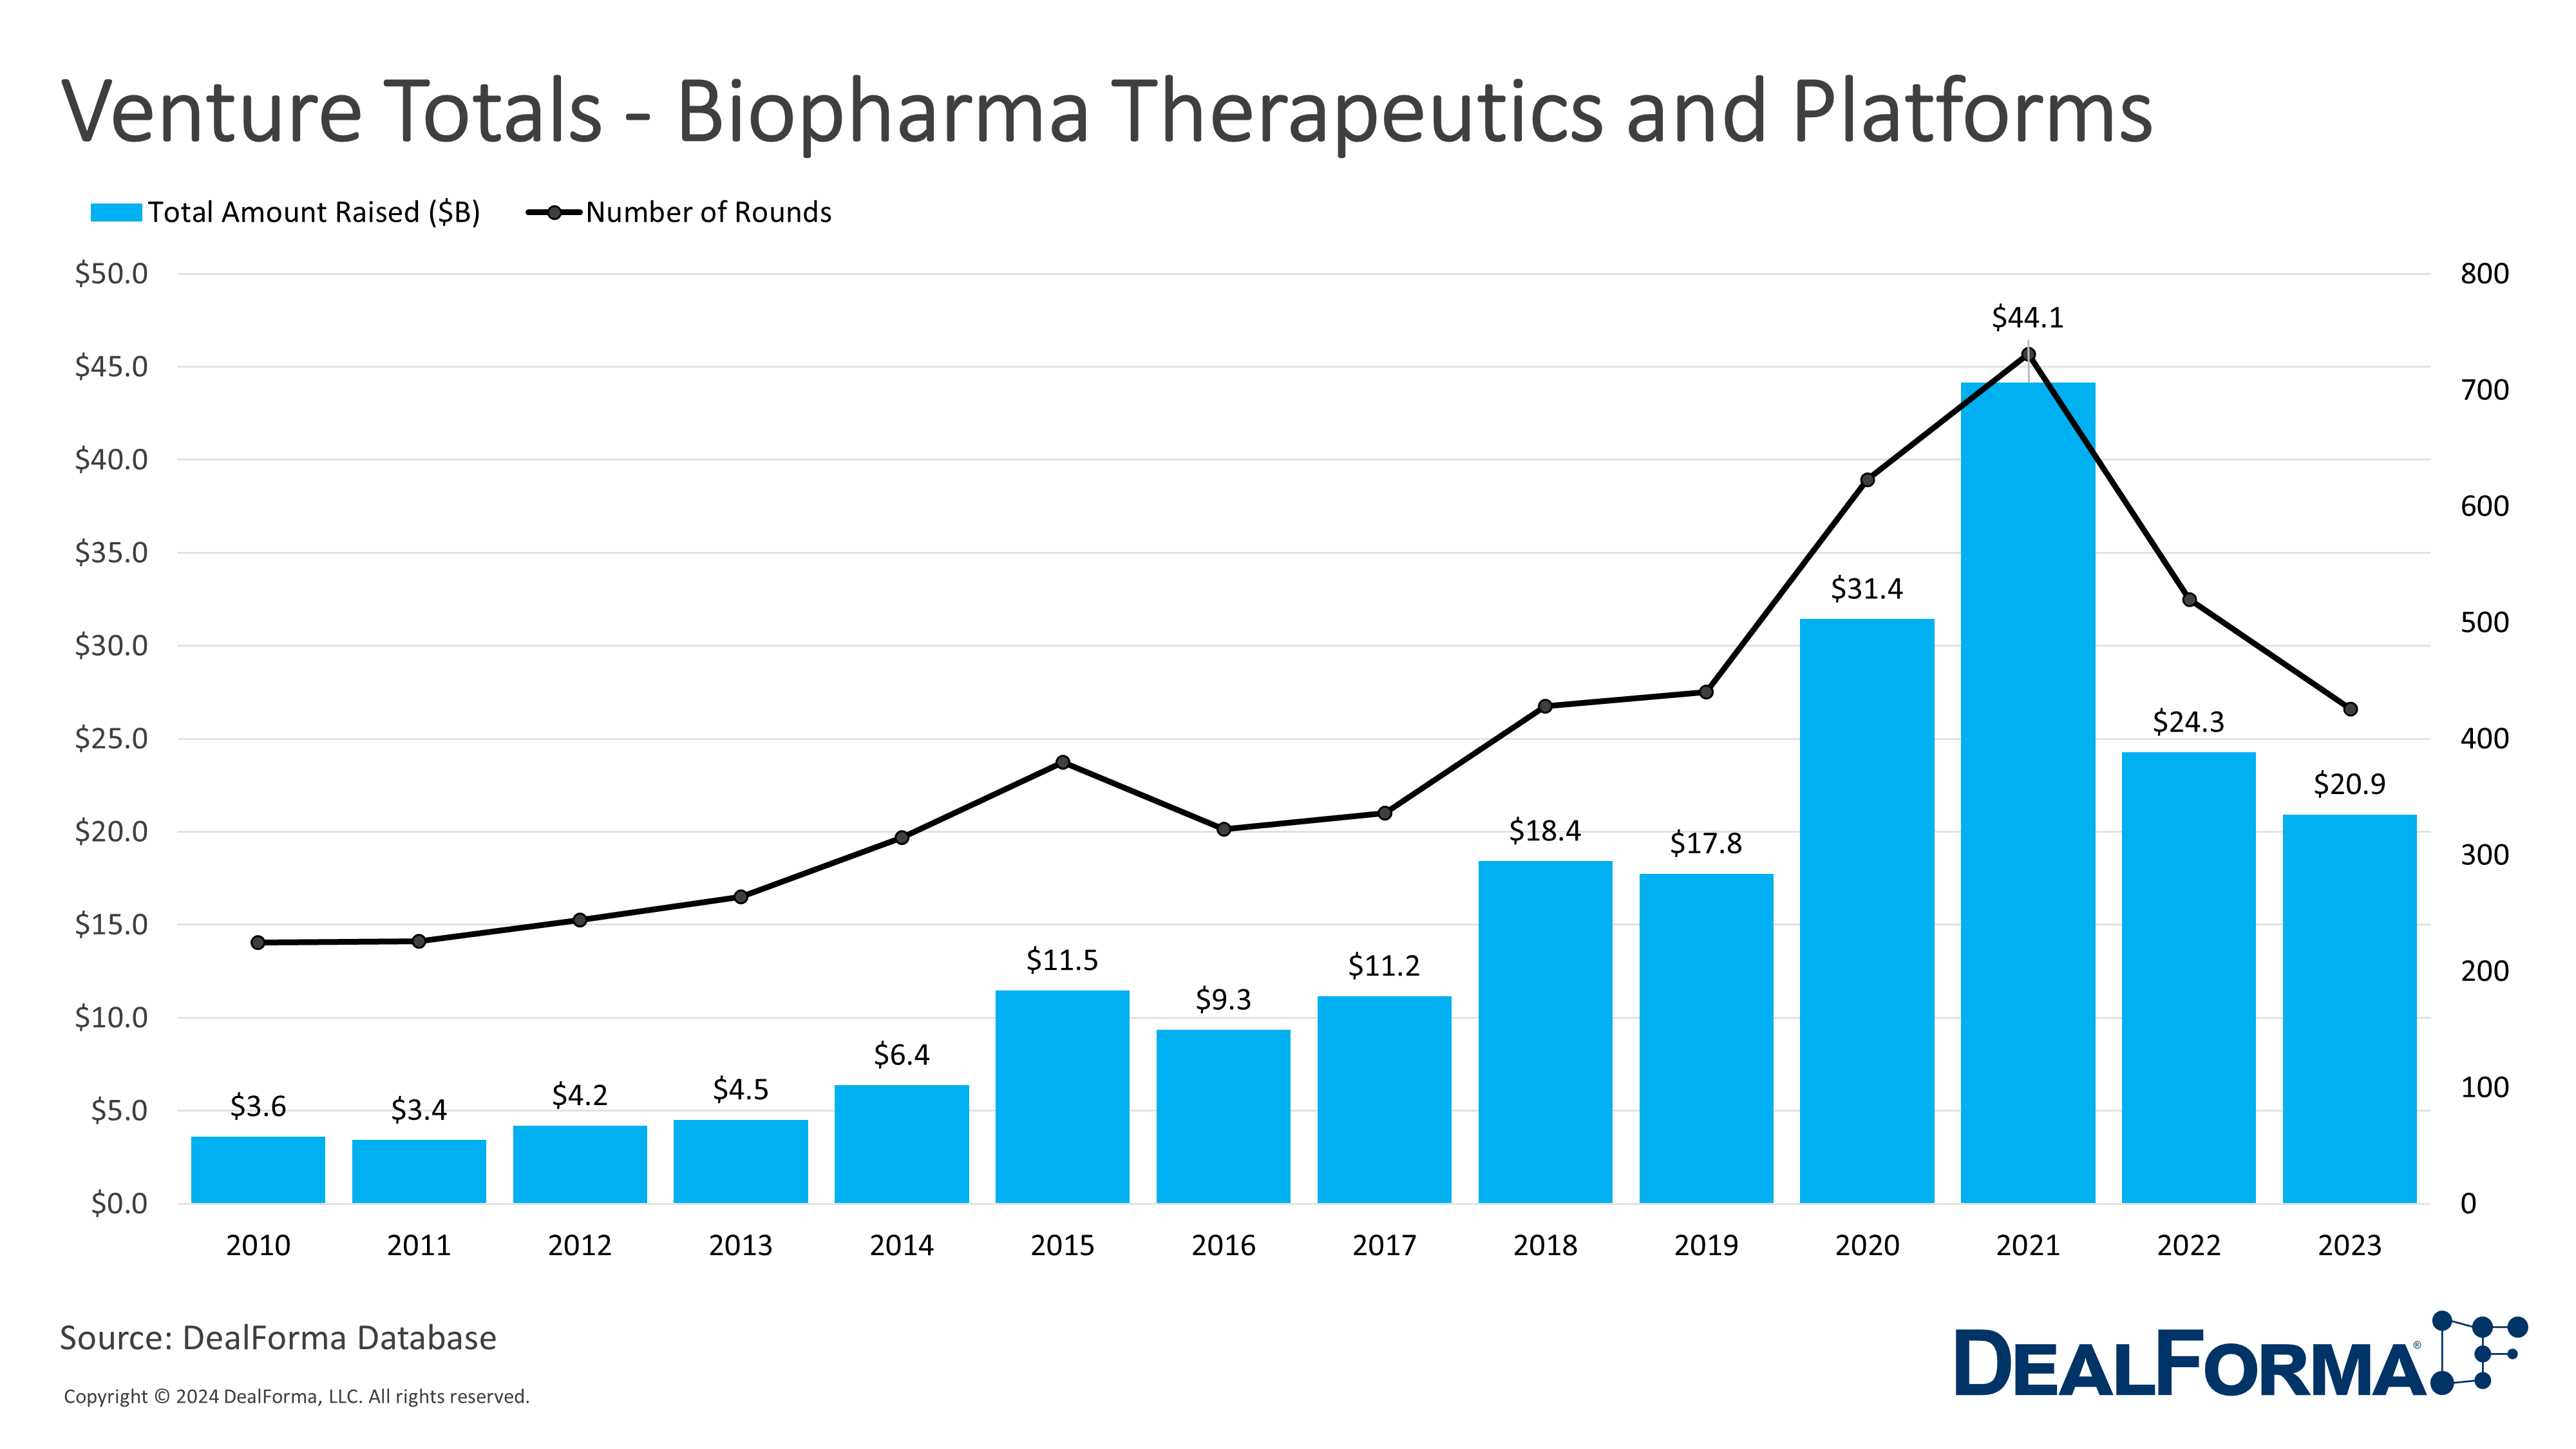 Venture Totals - Biopharma Therapeutics and Platforms